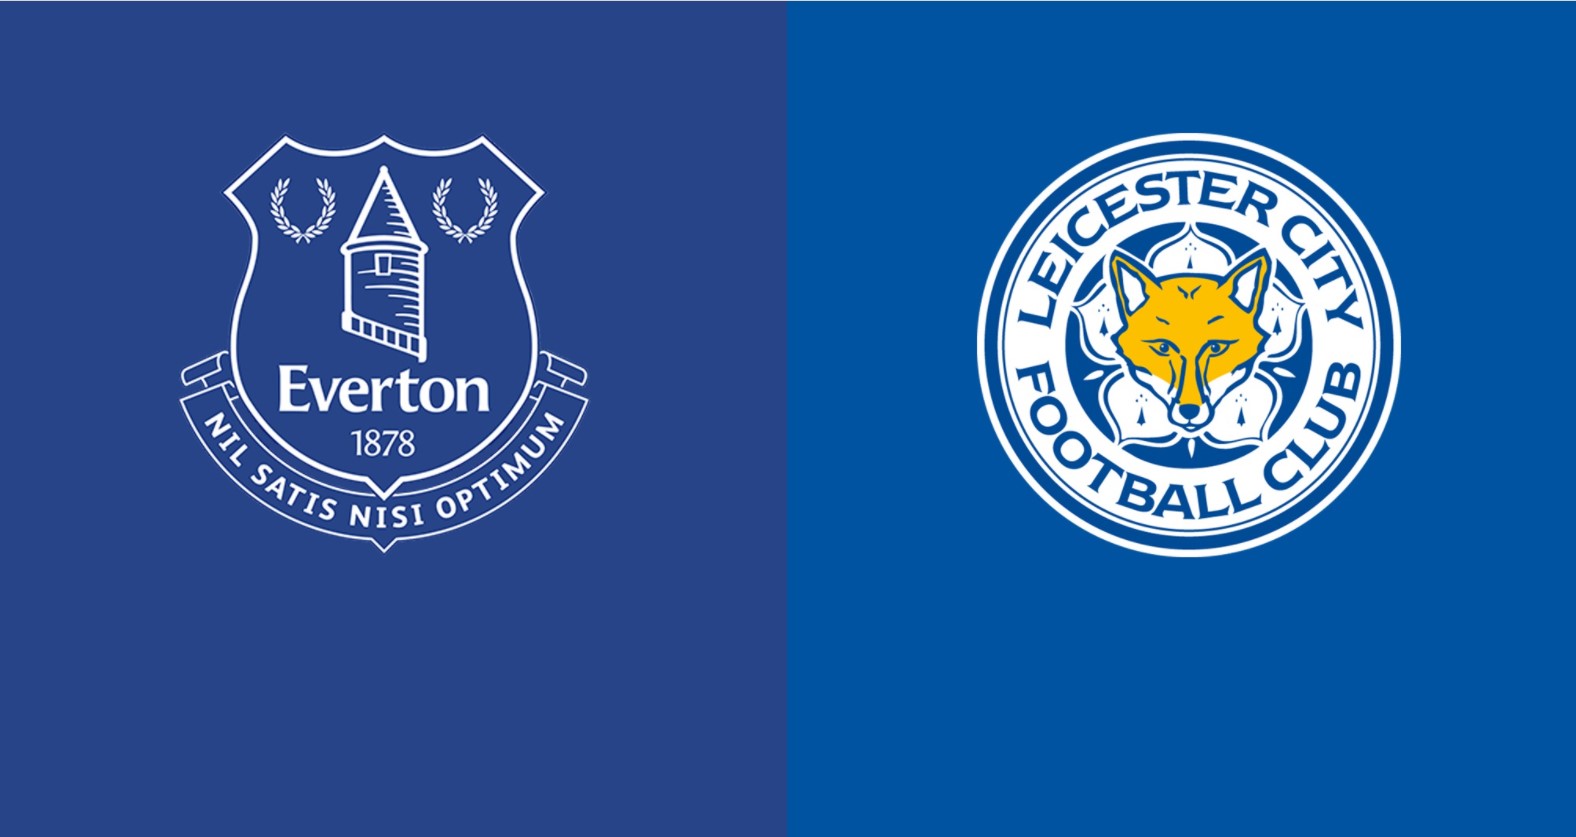 Everton vs Leicester City